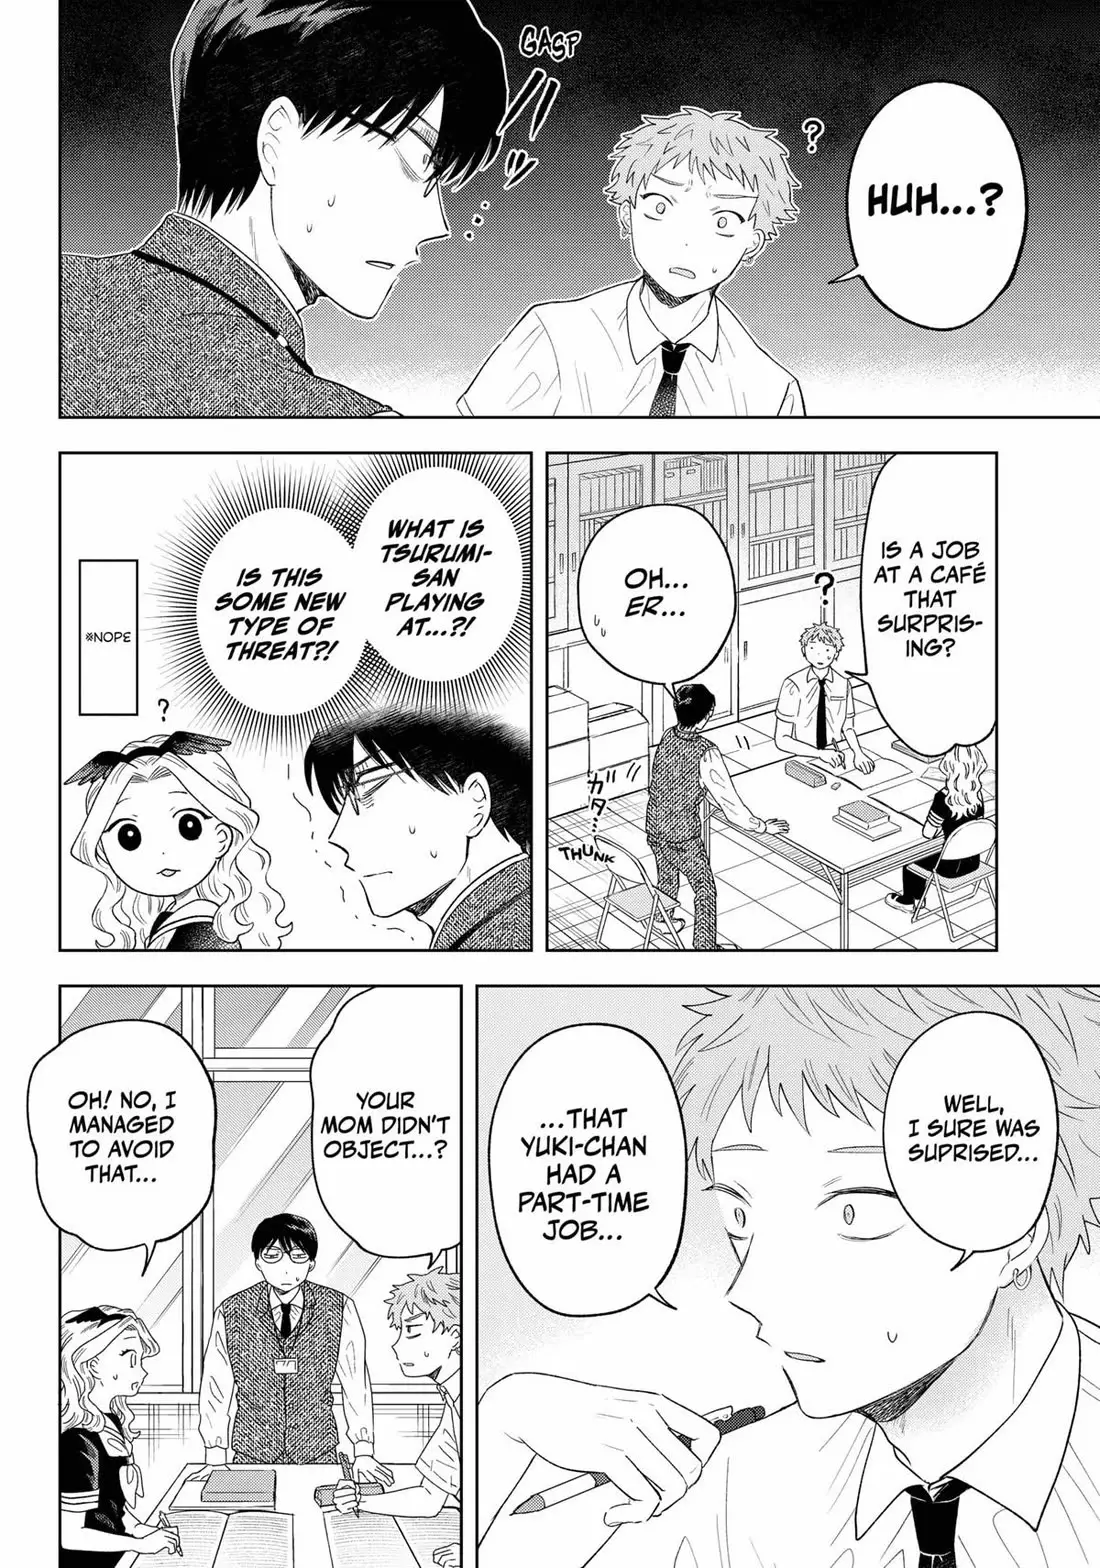 Tsuruko Returns The Favor - 17 page 8-9fff2784